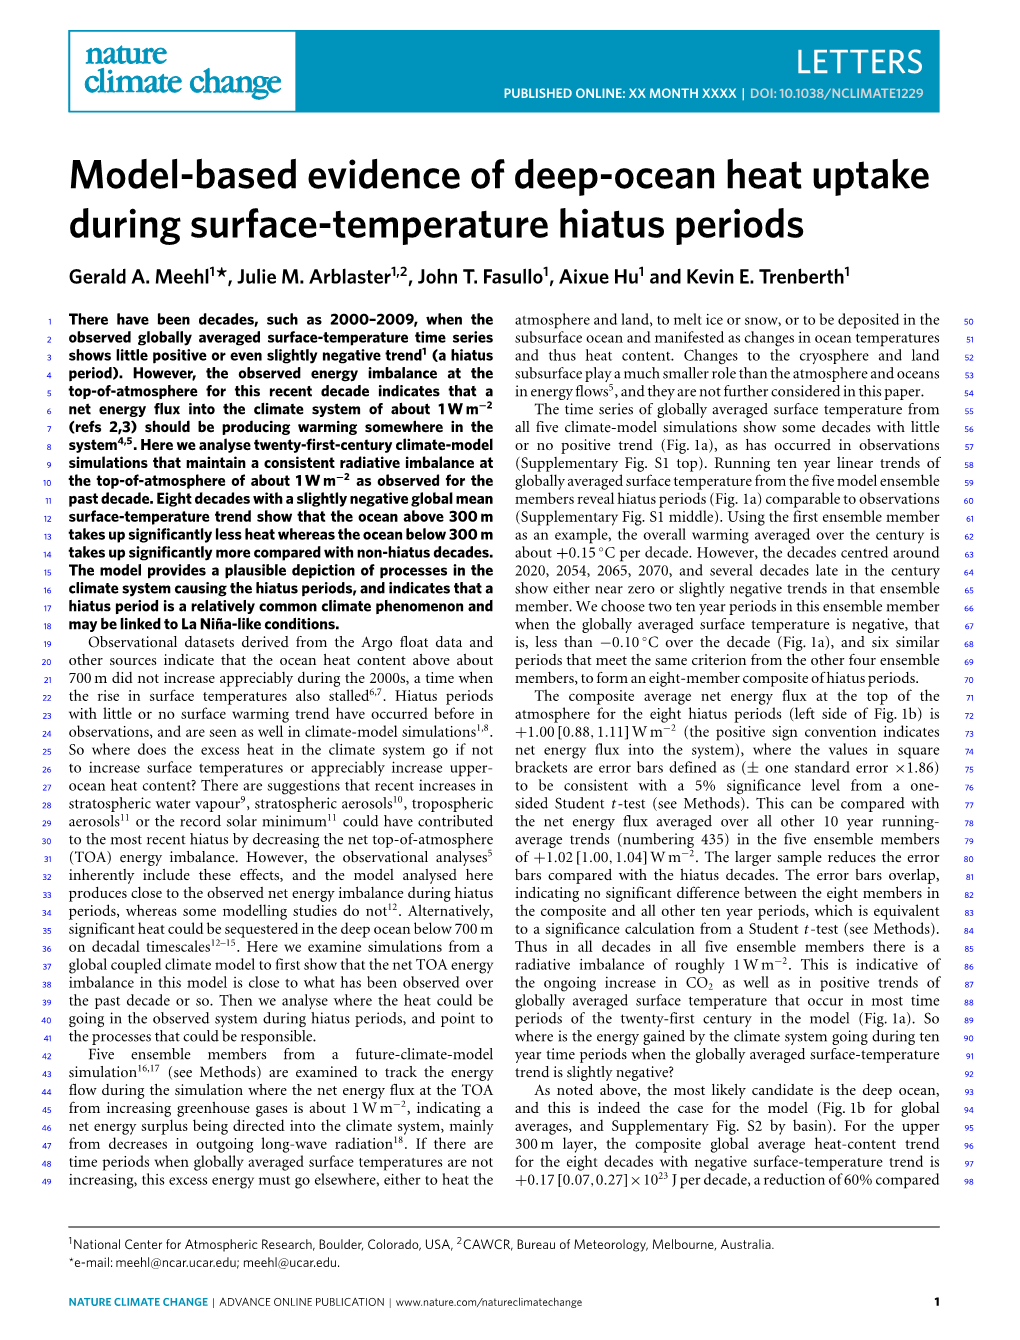 Model-Based Evidence of Deep-Ocean Heat Uptake During Surface-Temperature Hiatus Periods Gerald A